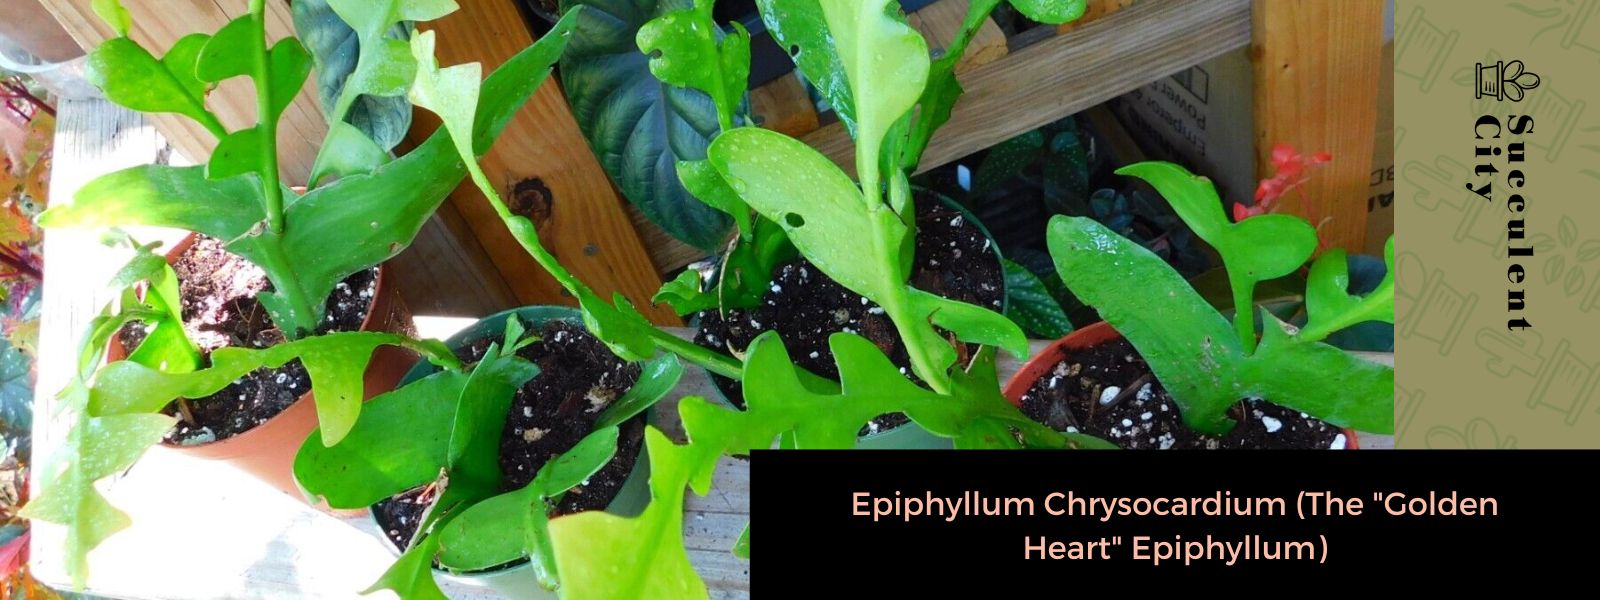 Epiphyllum Chrysocardium (El Epiphyllum del “corazón de oro”)